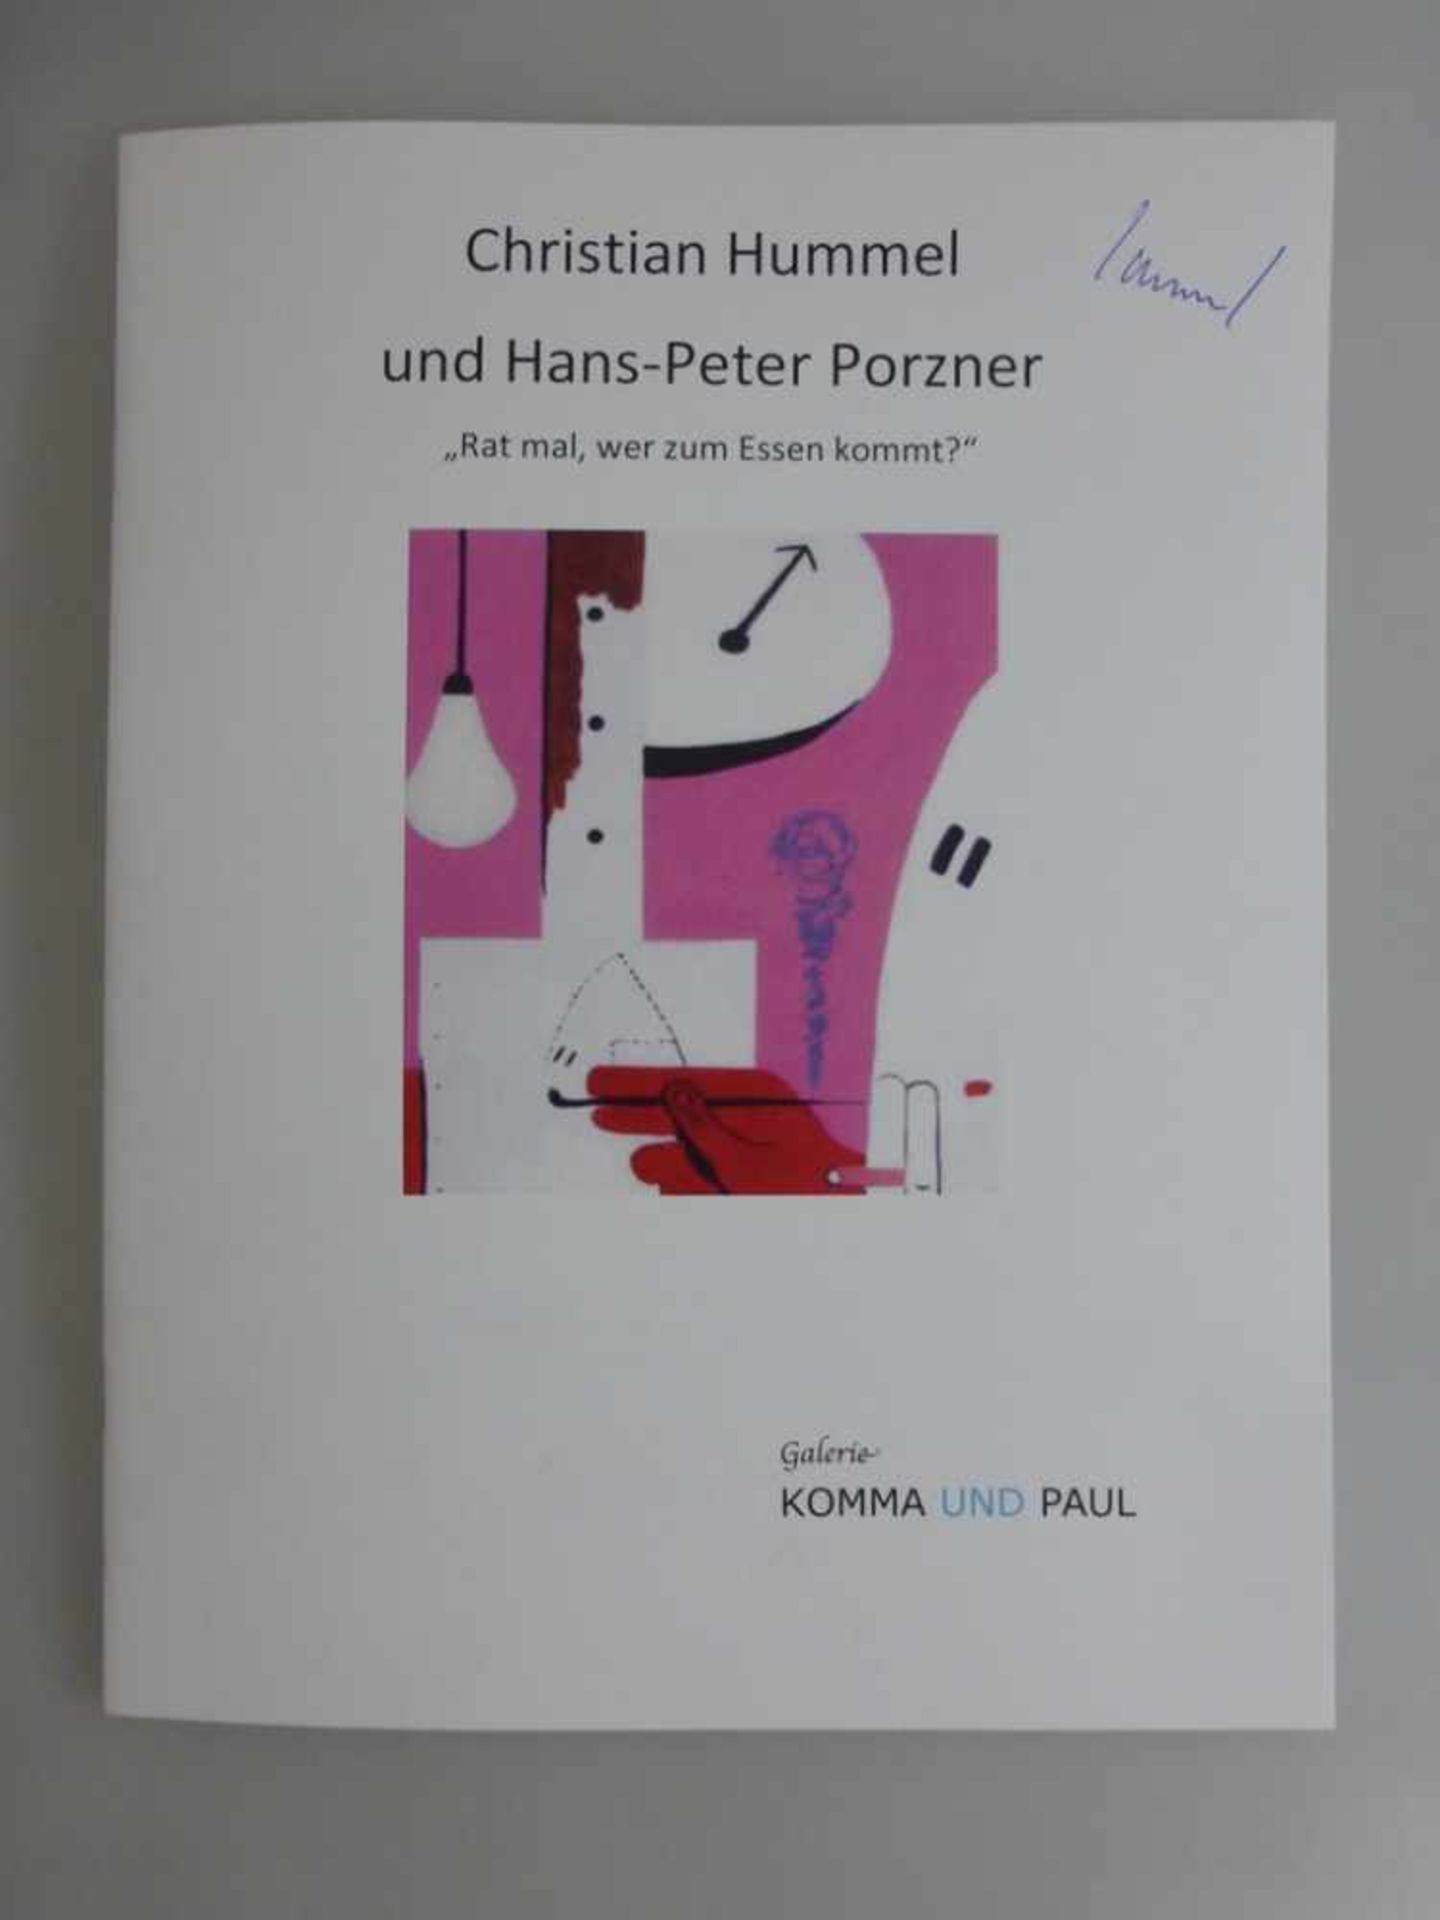 Kunstkatalog - Christian Hummel / Hans-Peter Porzner, Galerie Komma und Paul, mitAbbildungen von